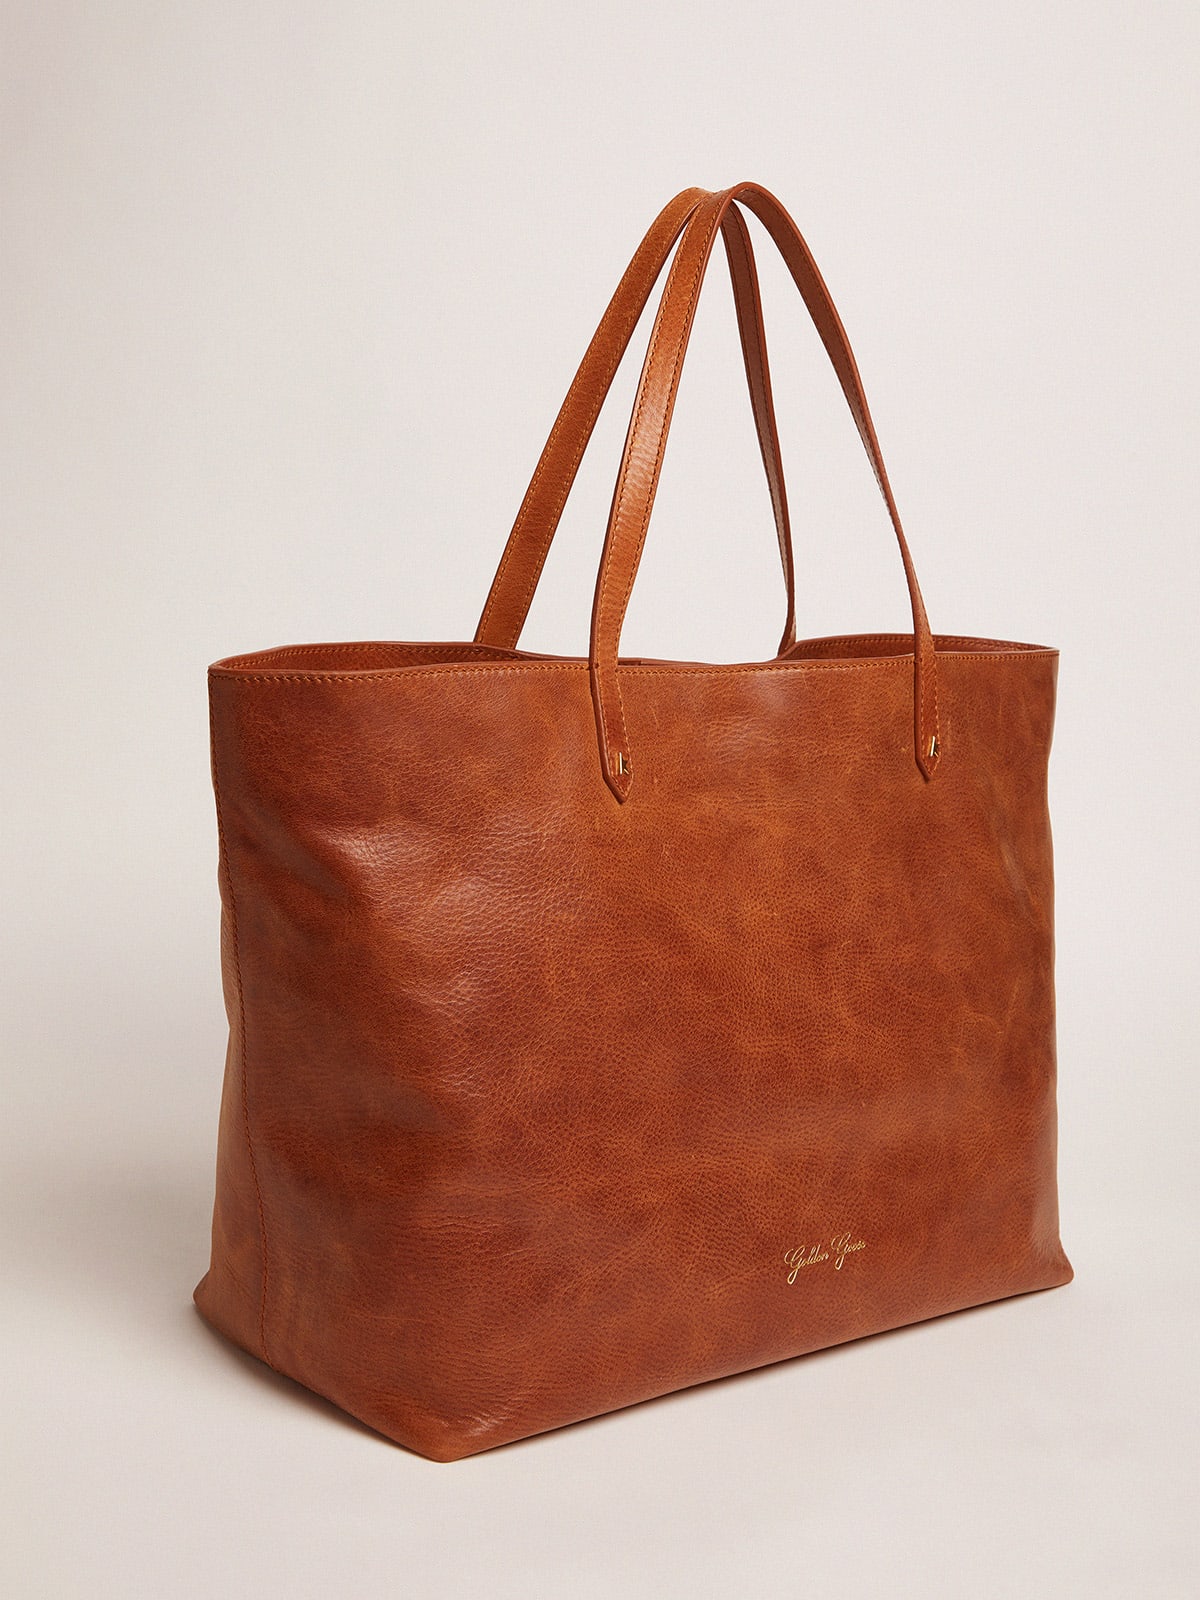 Golden Goose - Pasadena Bag in pelle lucida color cuoio con logo dorato sul davanti in 